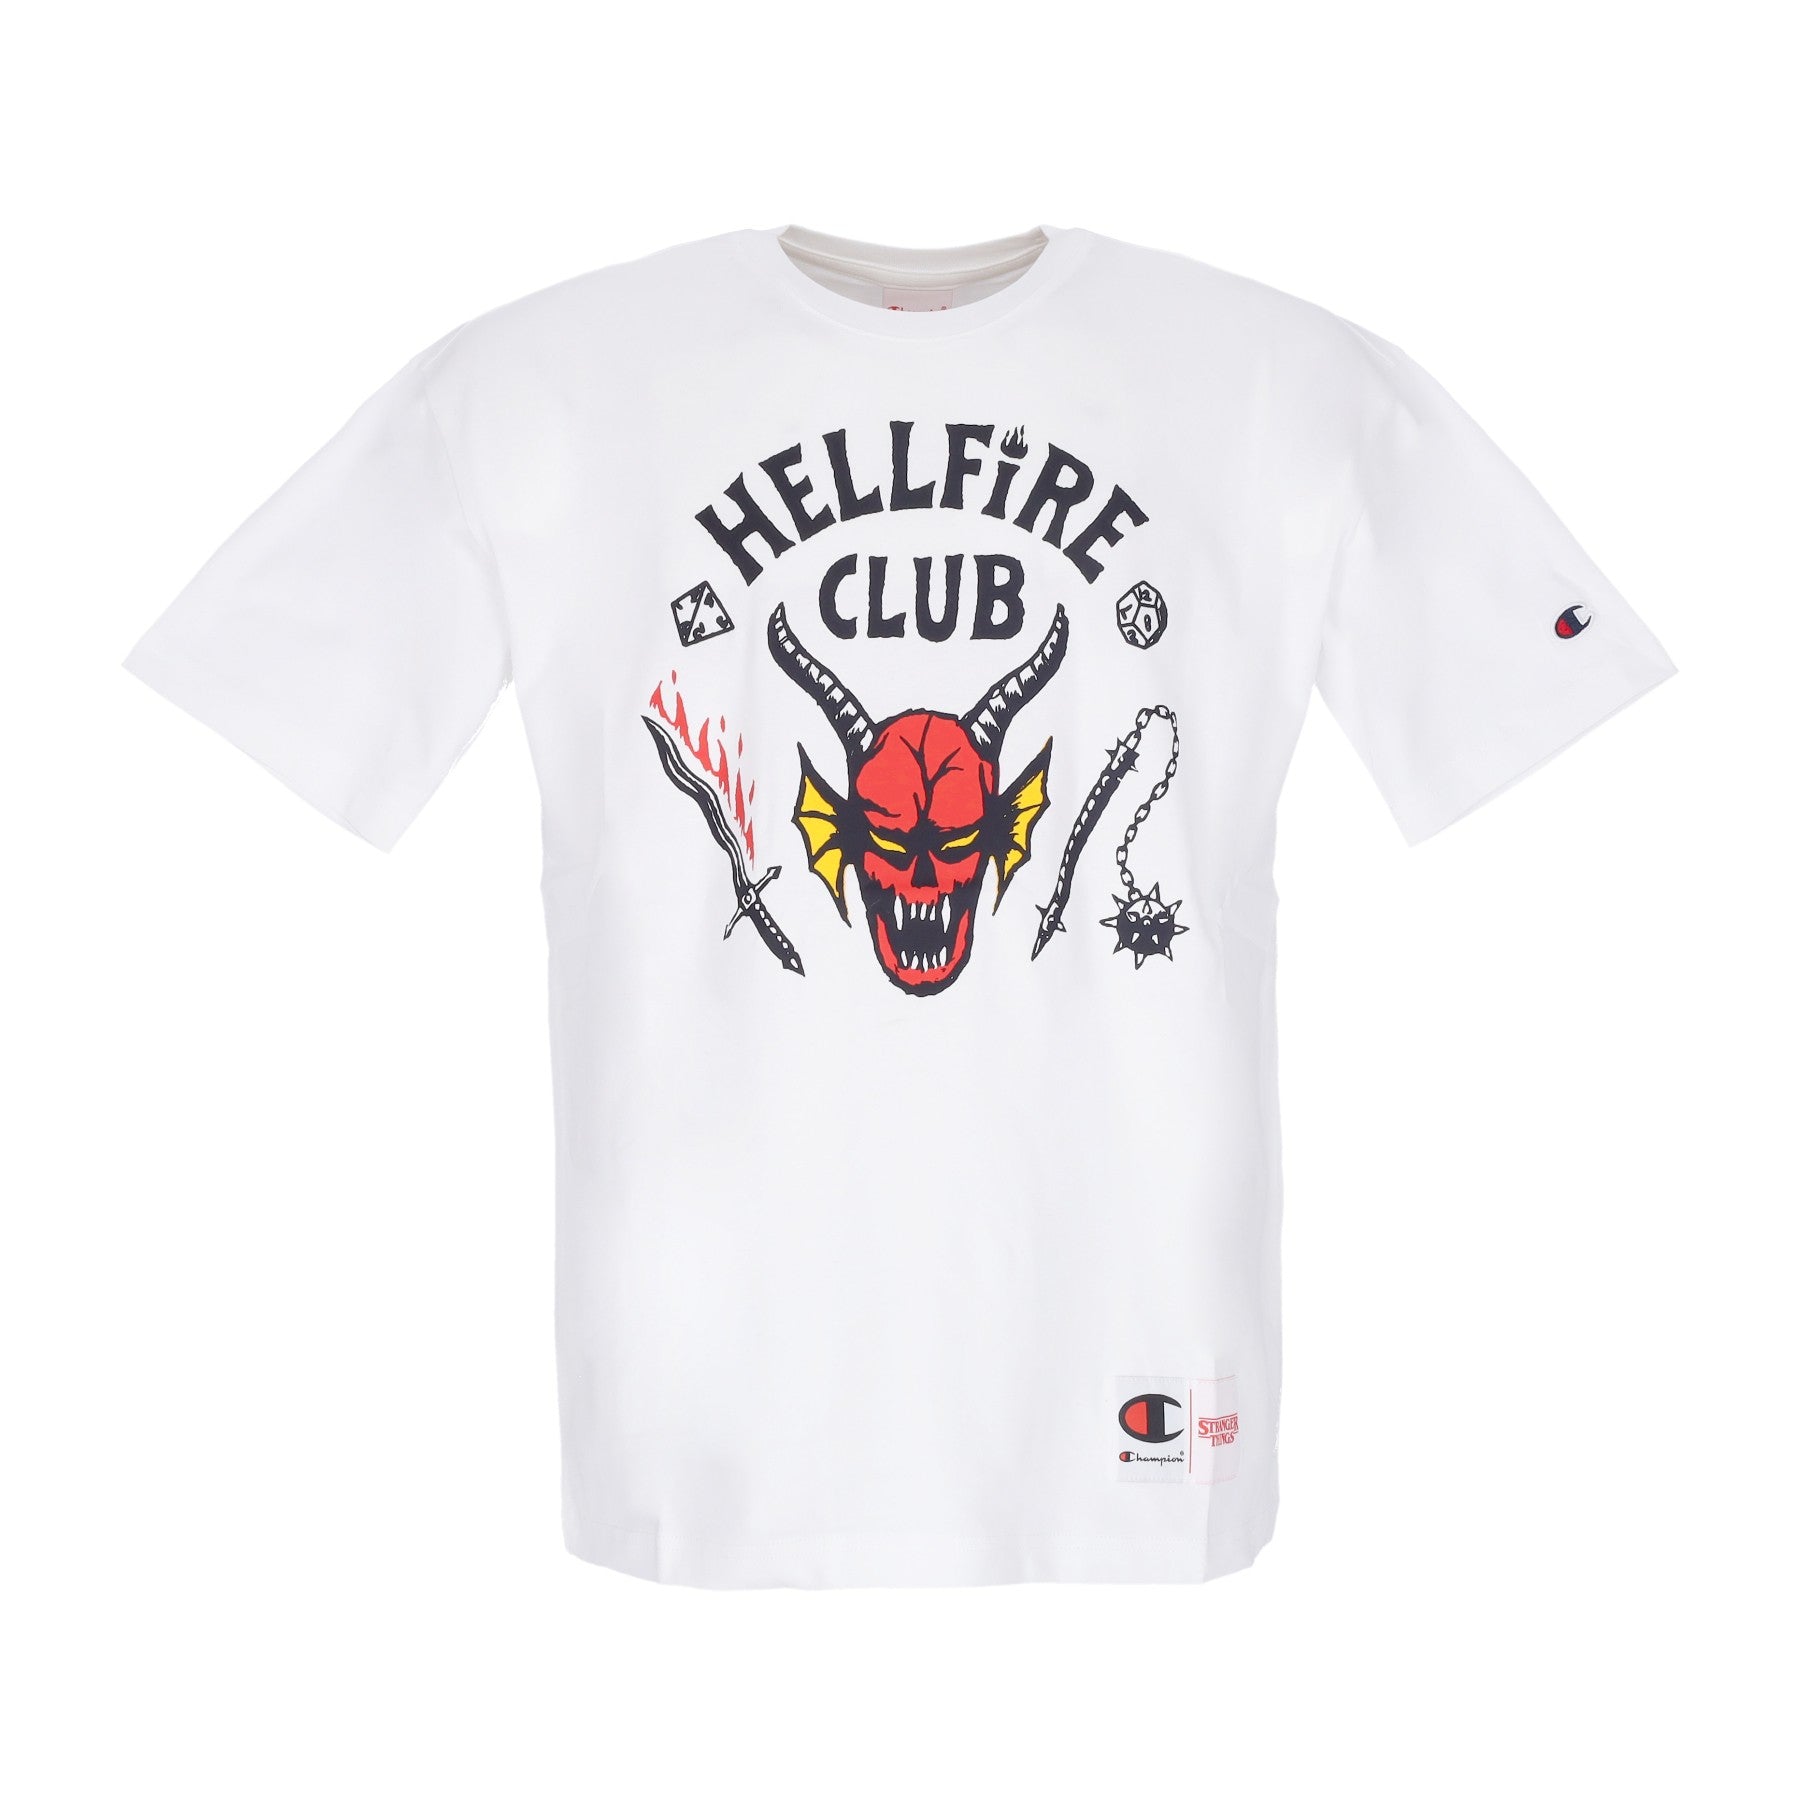 Hellfire Club Tee X Stranger Things Men's T-Shirt White/black/red/yellow